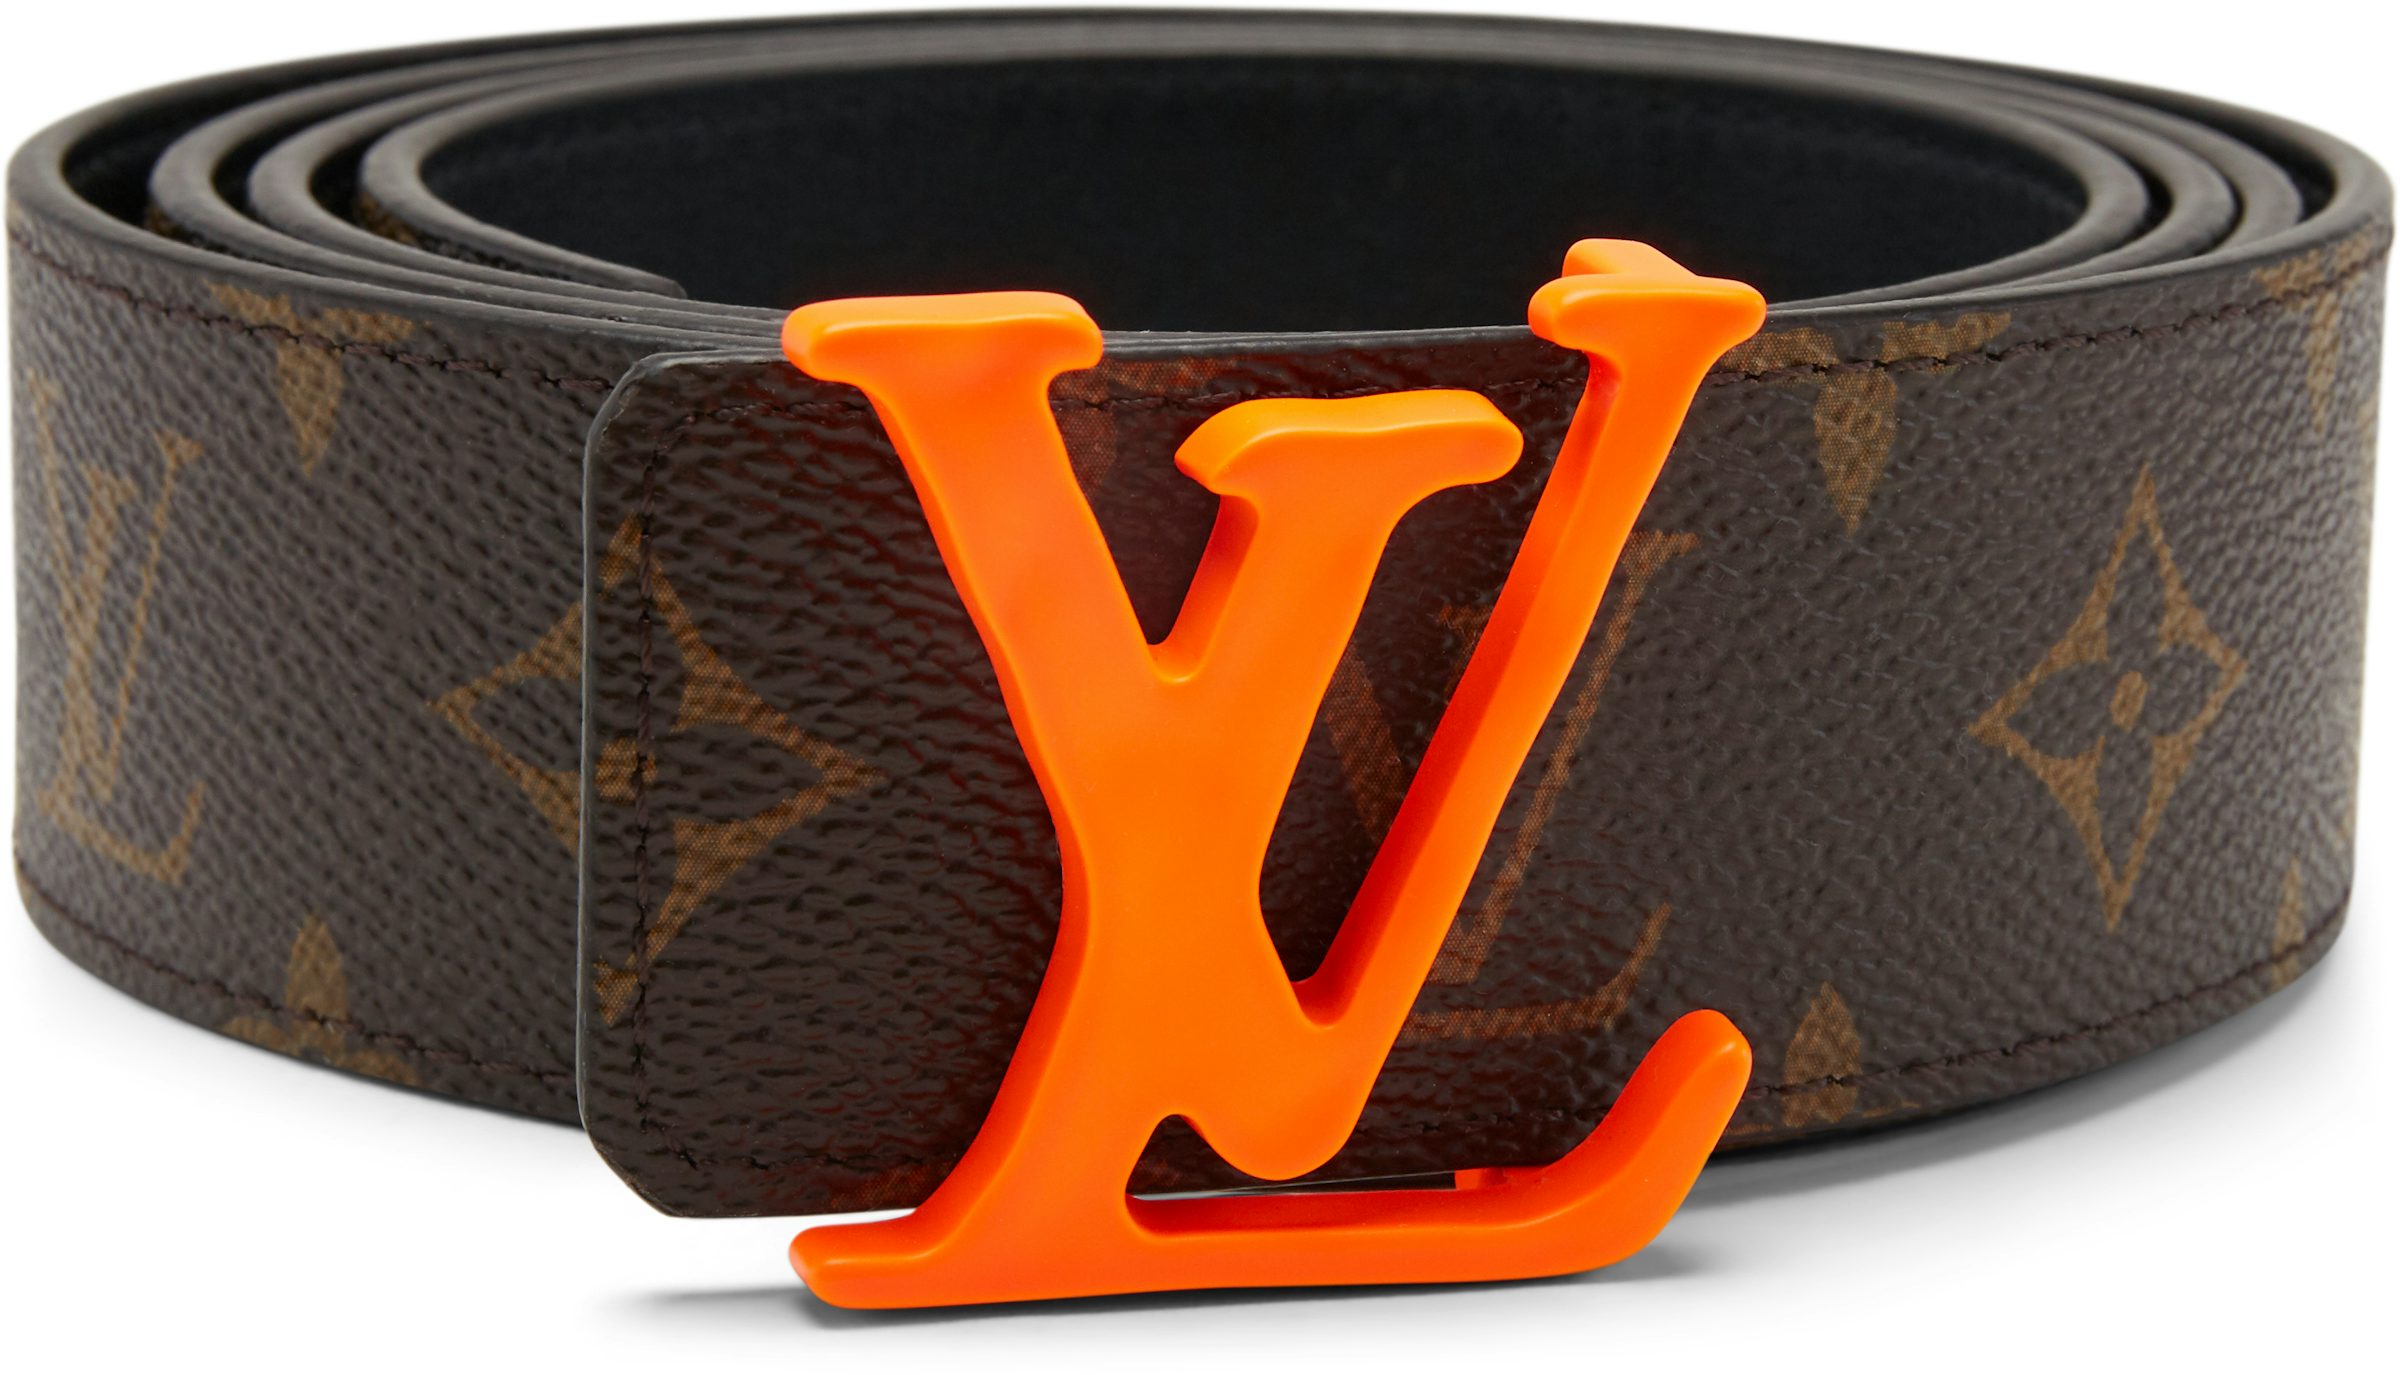 Louis Vuitton Belts #Louis #Vuitton #Belts